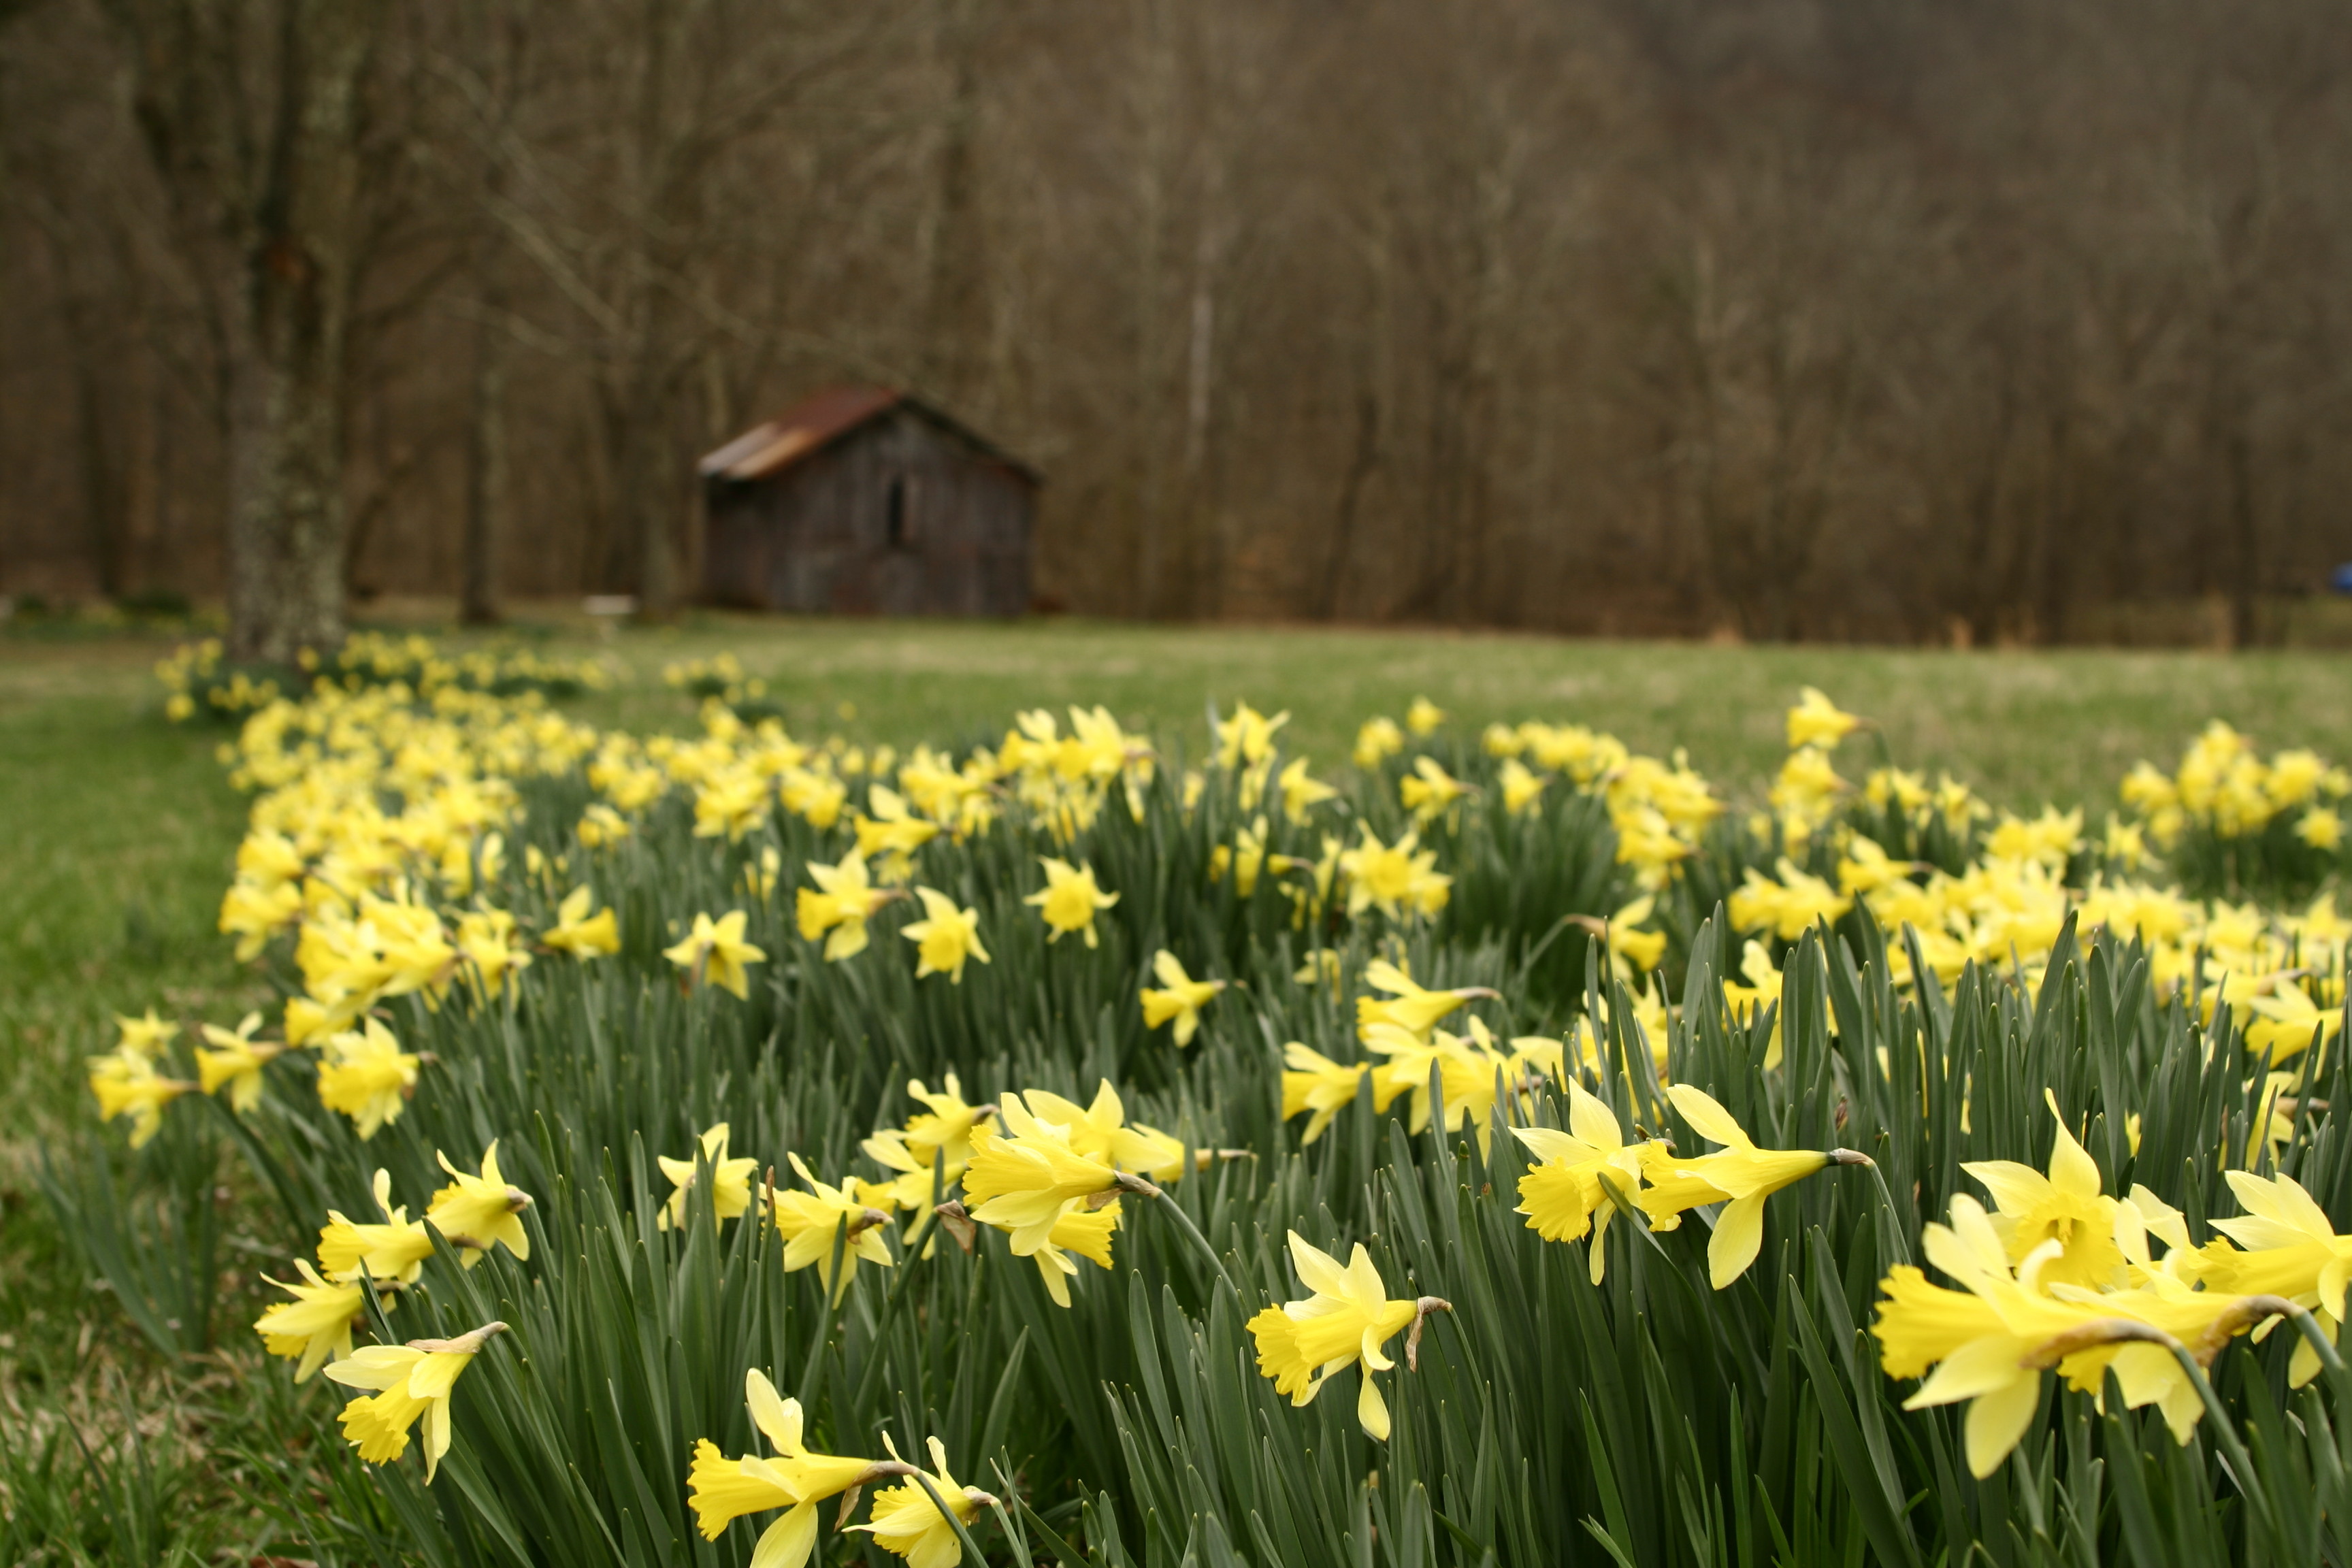 Daffodil days arrive at UFV